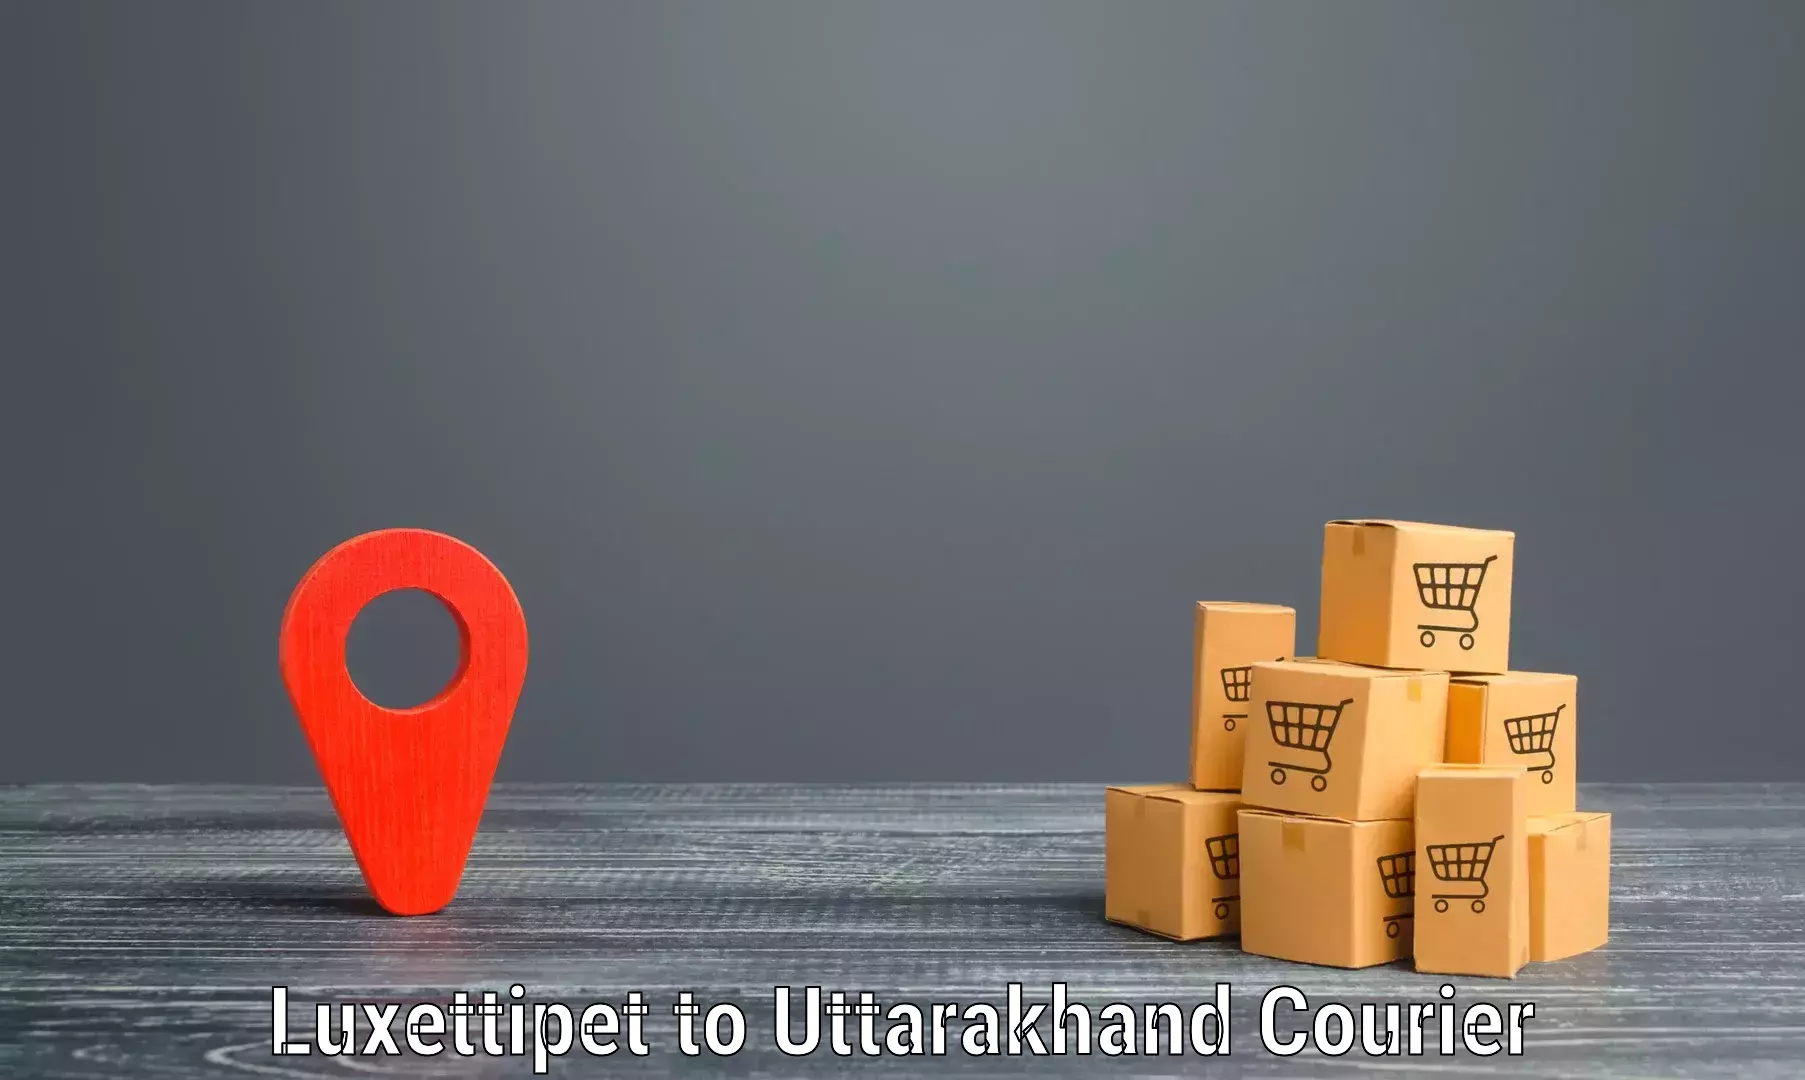 Courier app in Luxettipet to Srinagar Pauri Garhwal